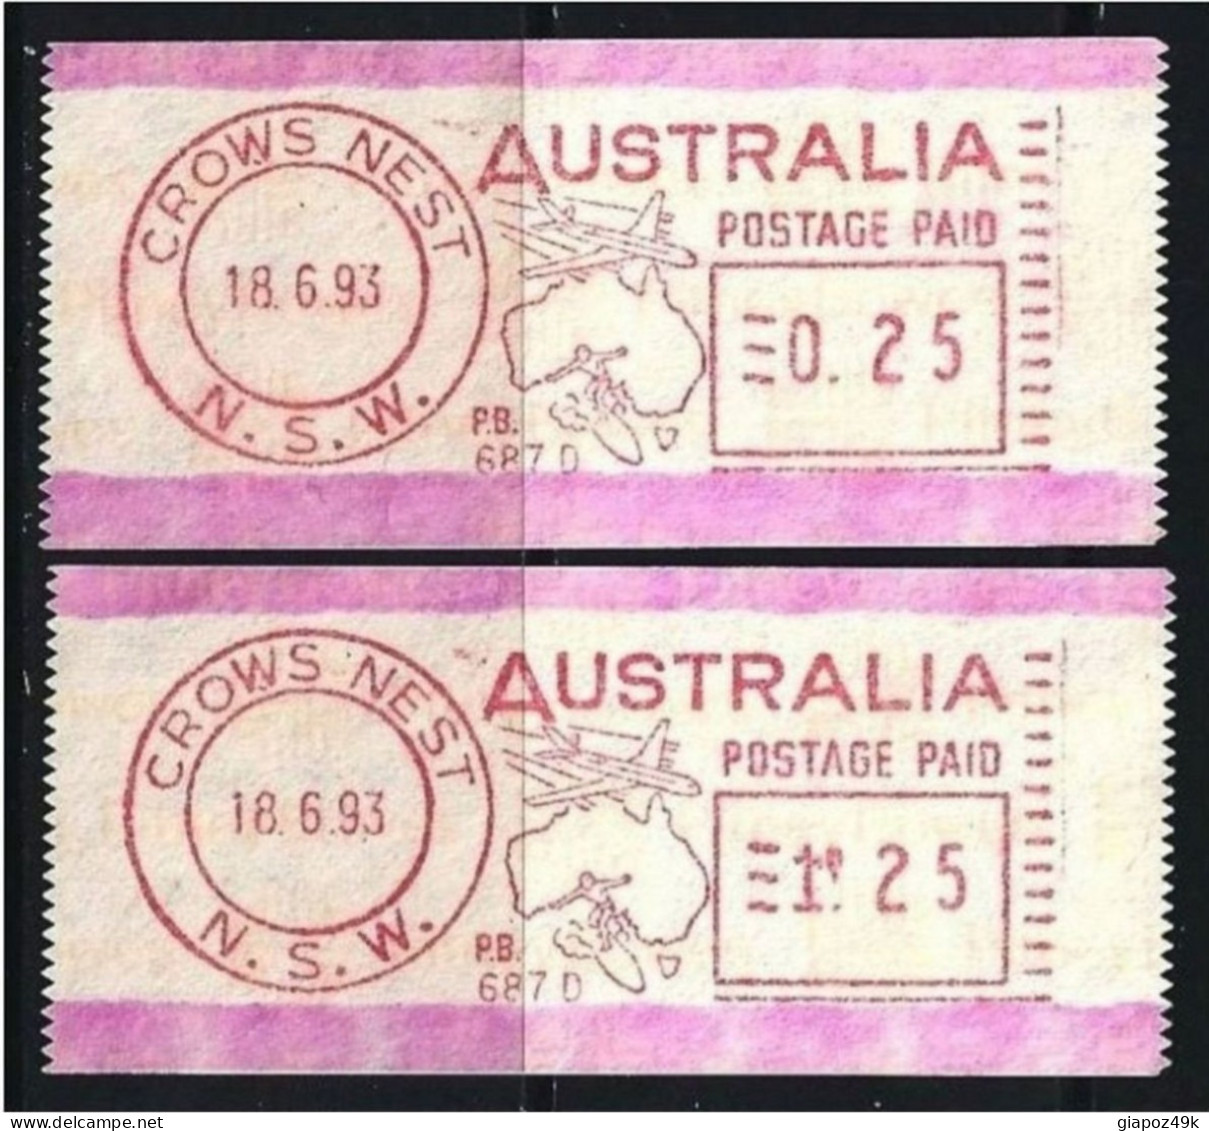 ● AUSTRALIA 1993 ️● POSTAGE PAID ● Usati  Da 0,25 E 1,25 C. ● Cat. ? ● € ️ Lotto 58 ️● - Machine Labels [ATM]